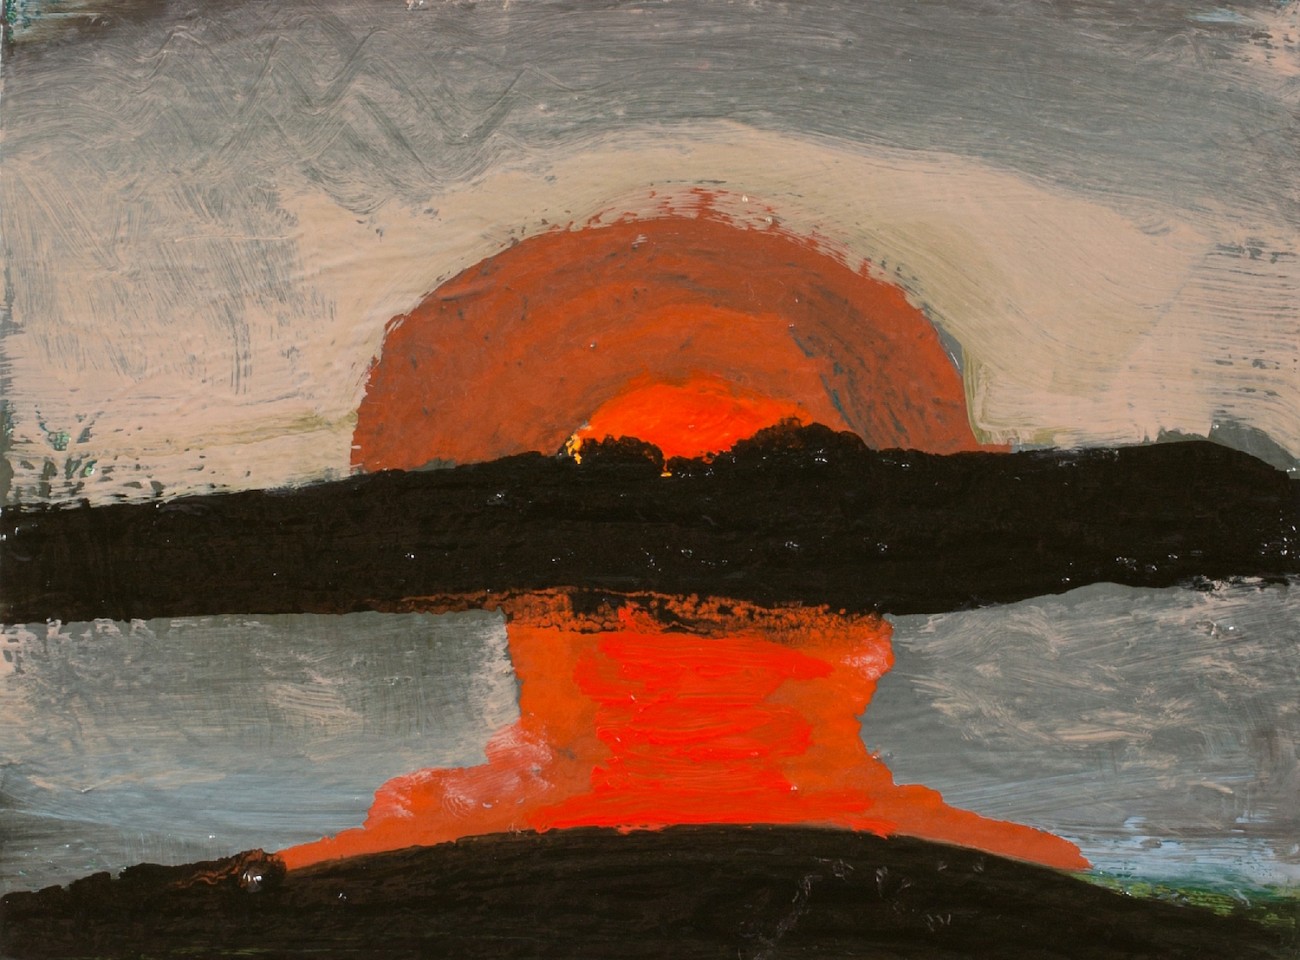 Kathryn Lynch
rising red, 2017
lyn677
oil on panel, 6 x 8 inches